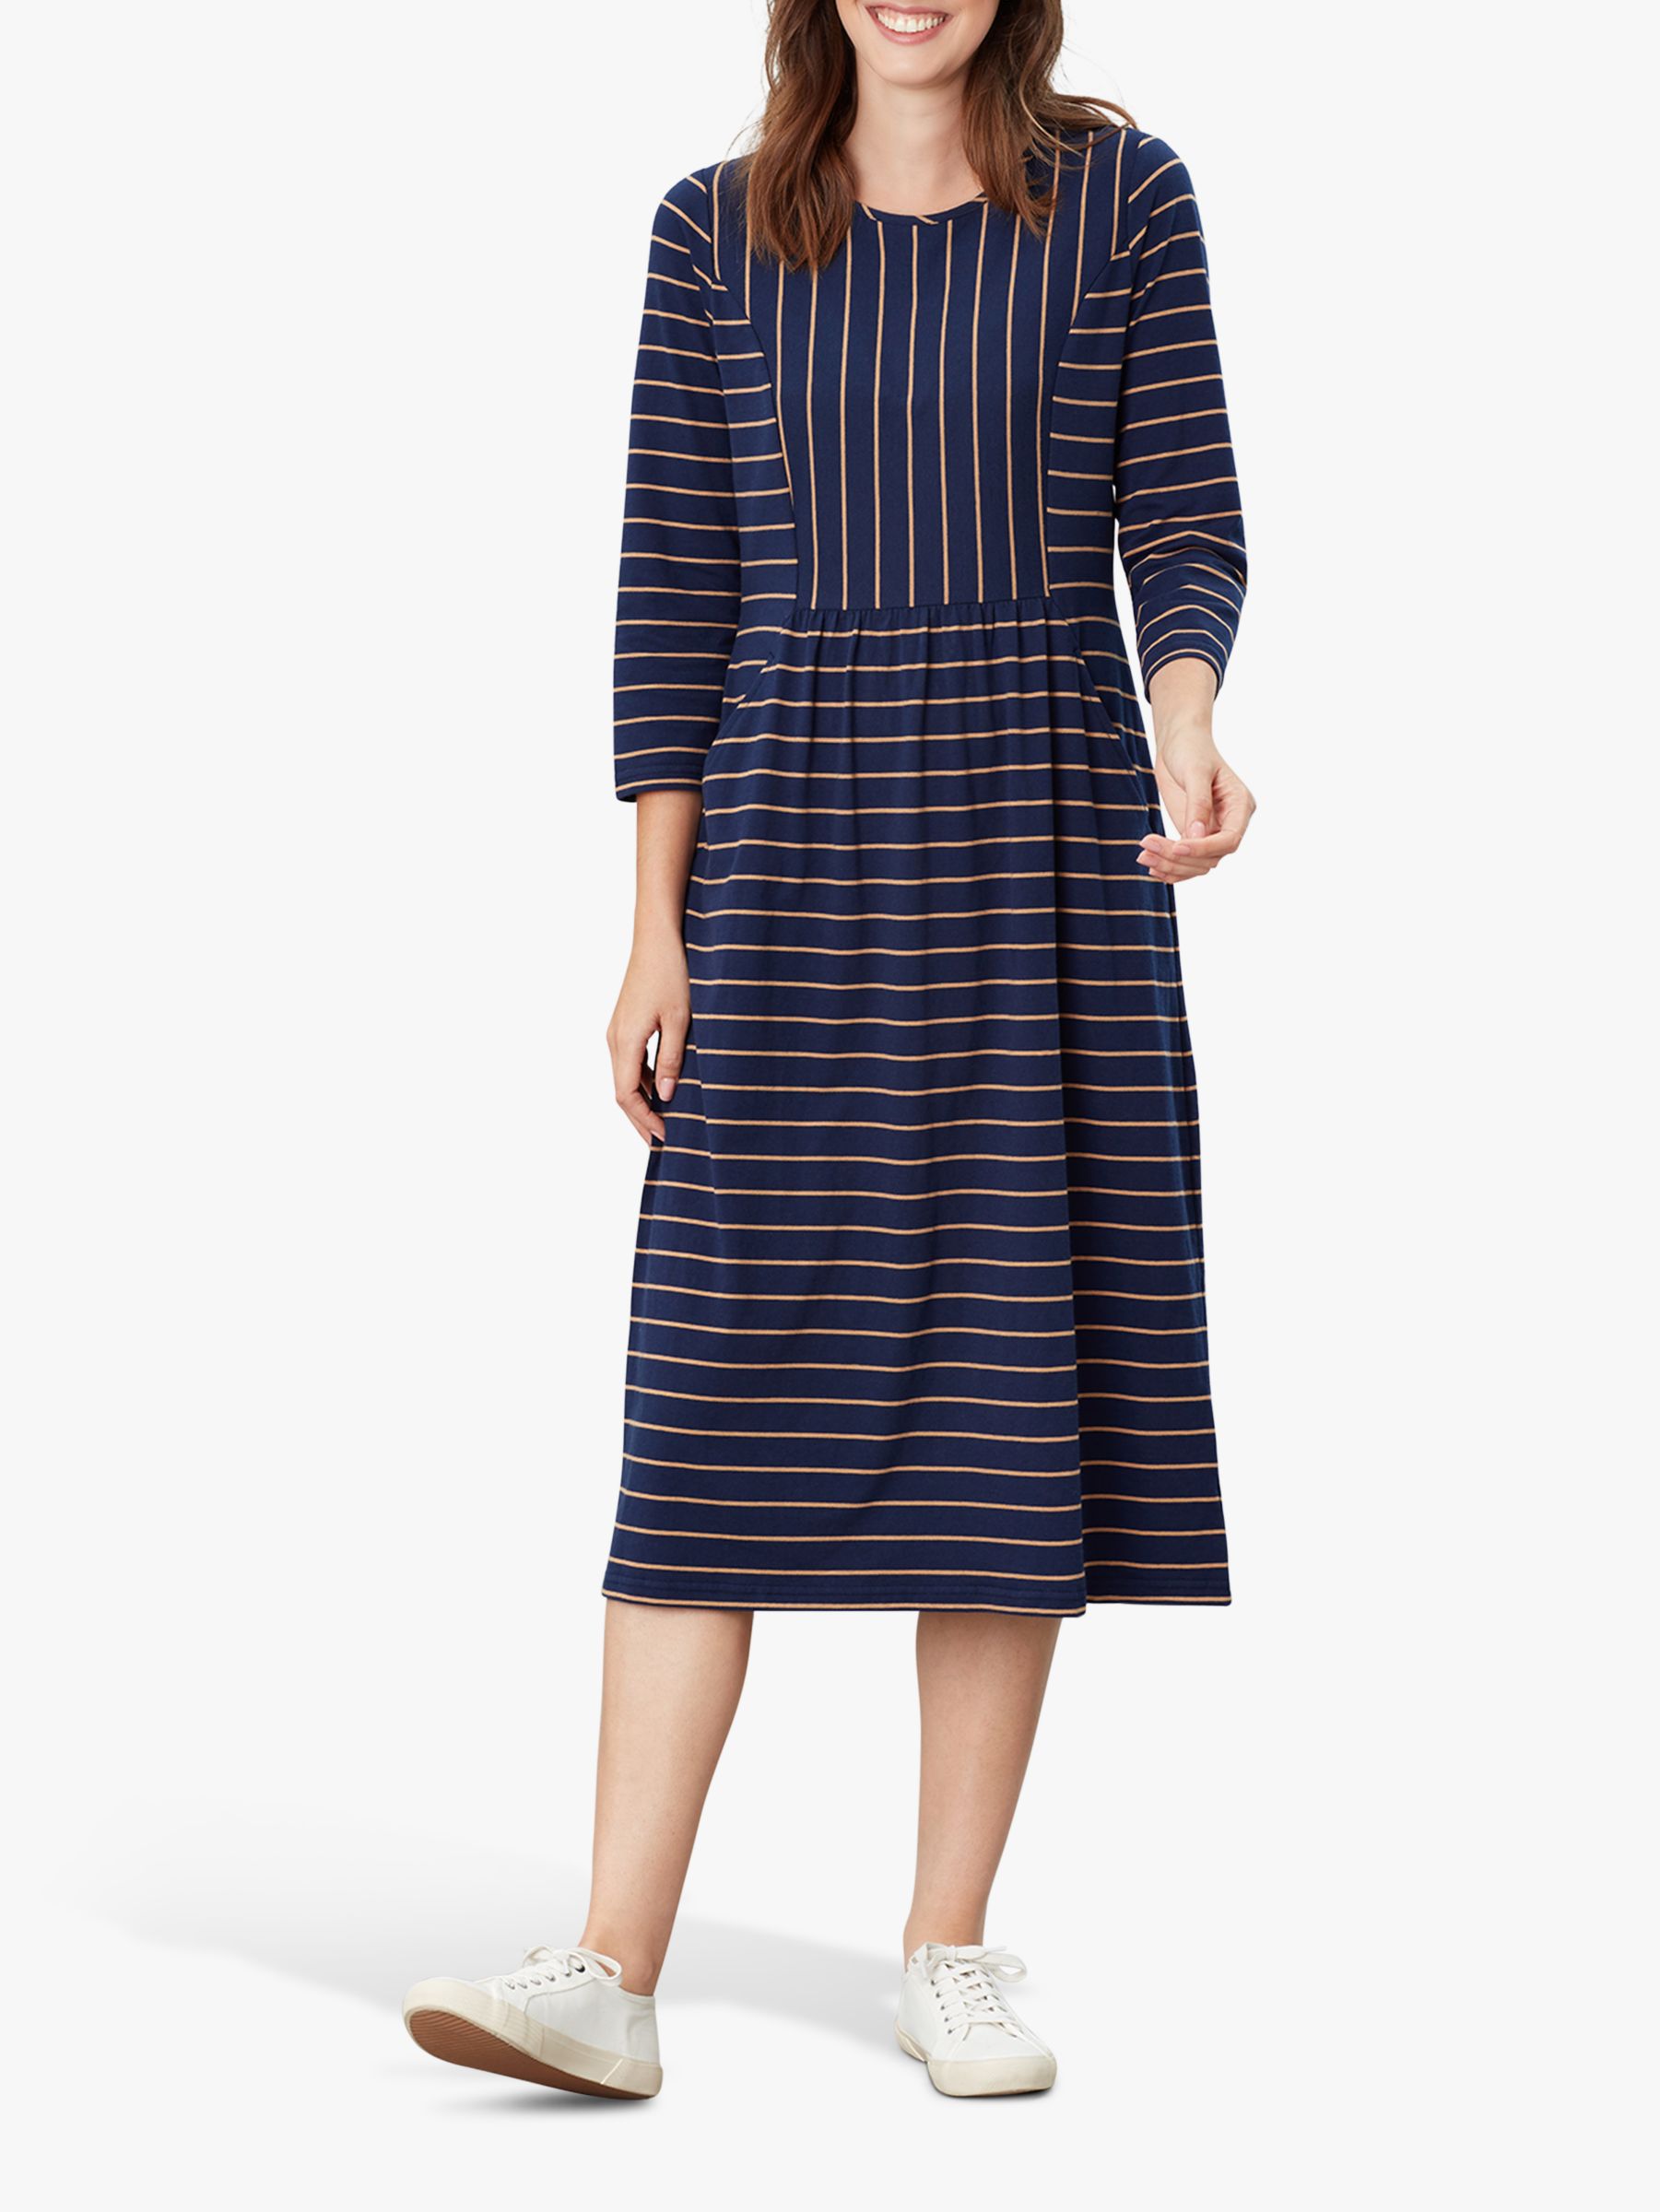 Joules Audrey Striped Jersey Dress, Navy/Tan